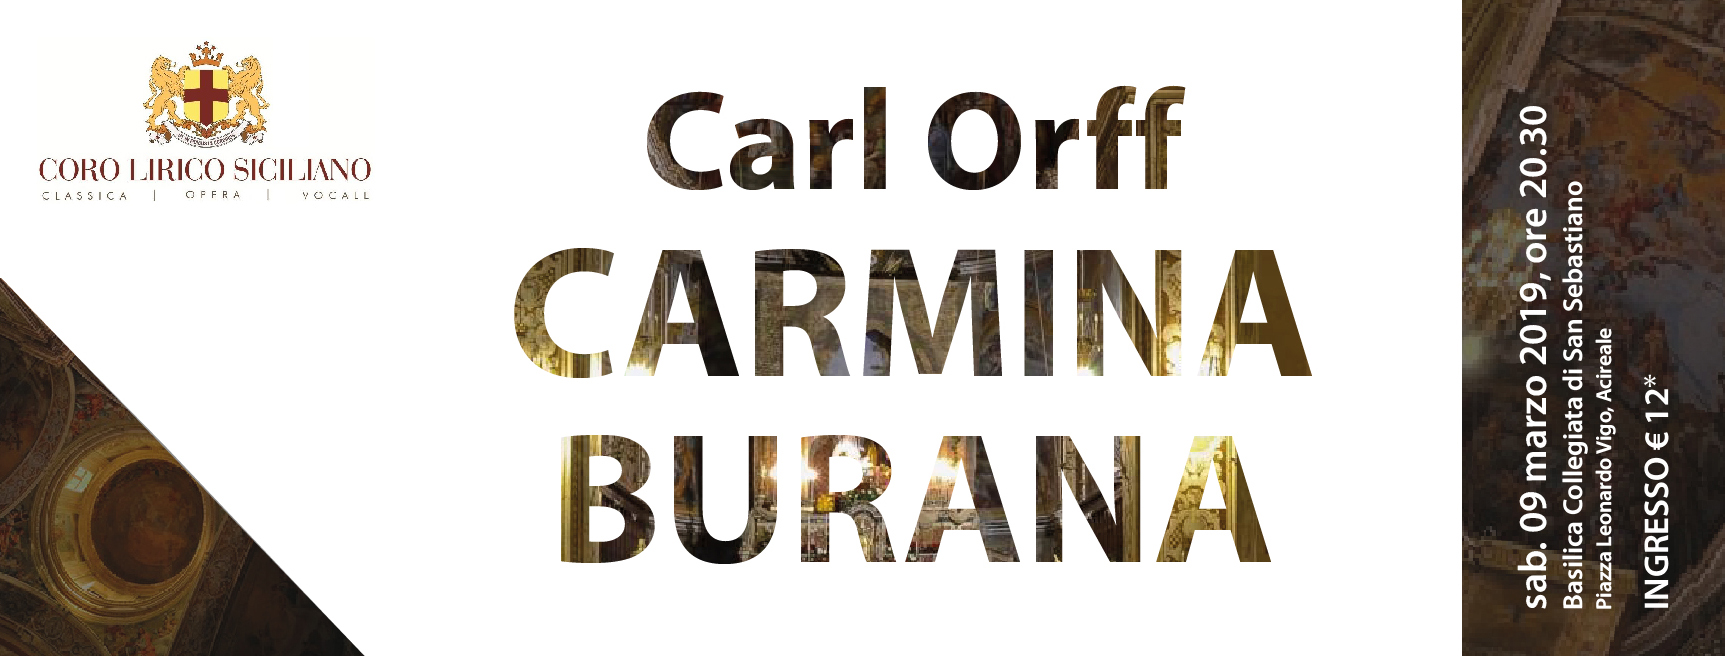 Acireale accoglie i Carmina Burana di Carl Orff